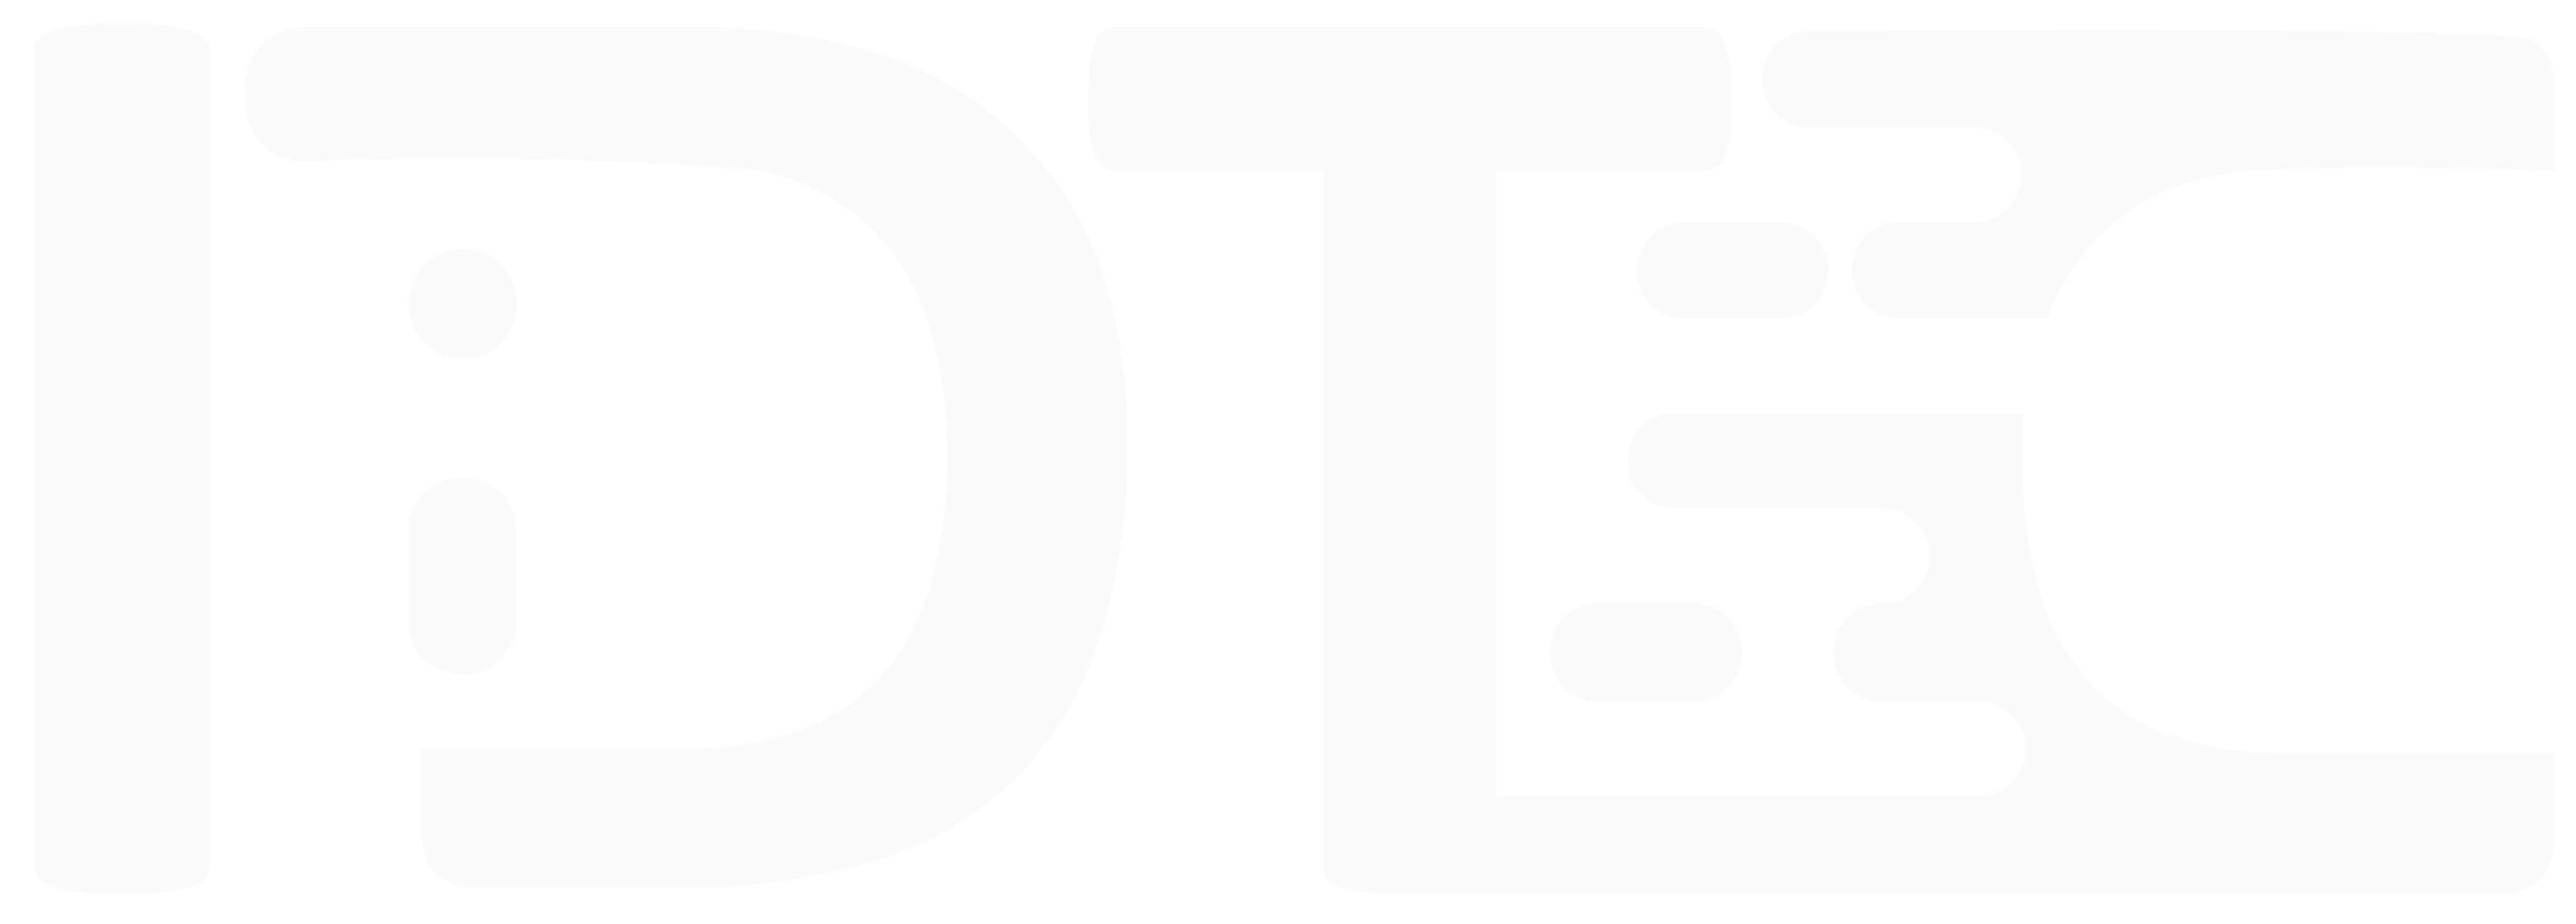 IDTC logo no year white